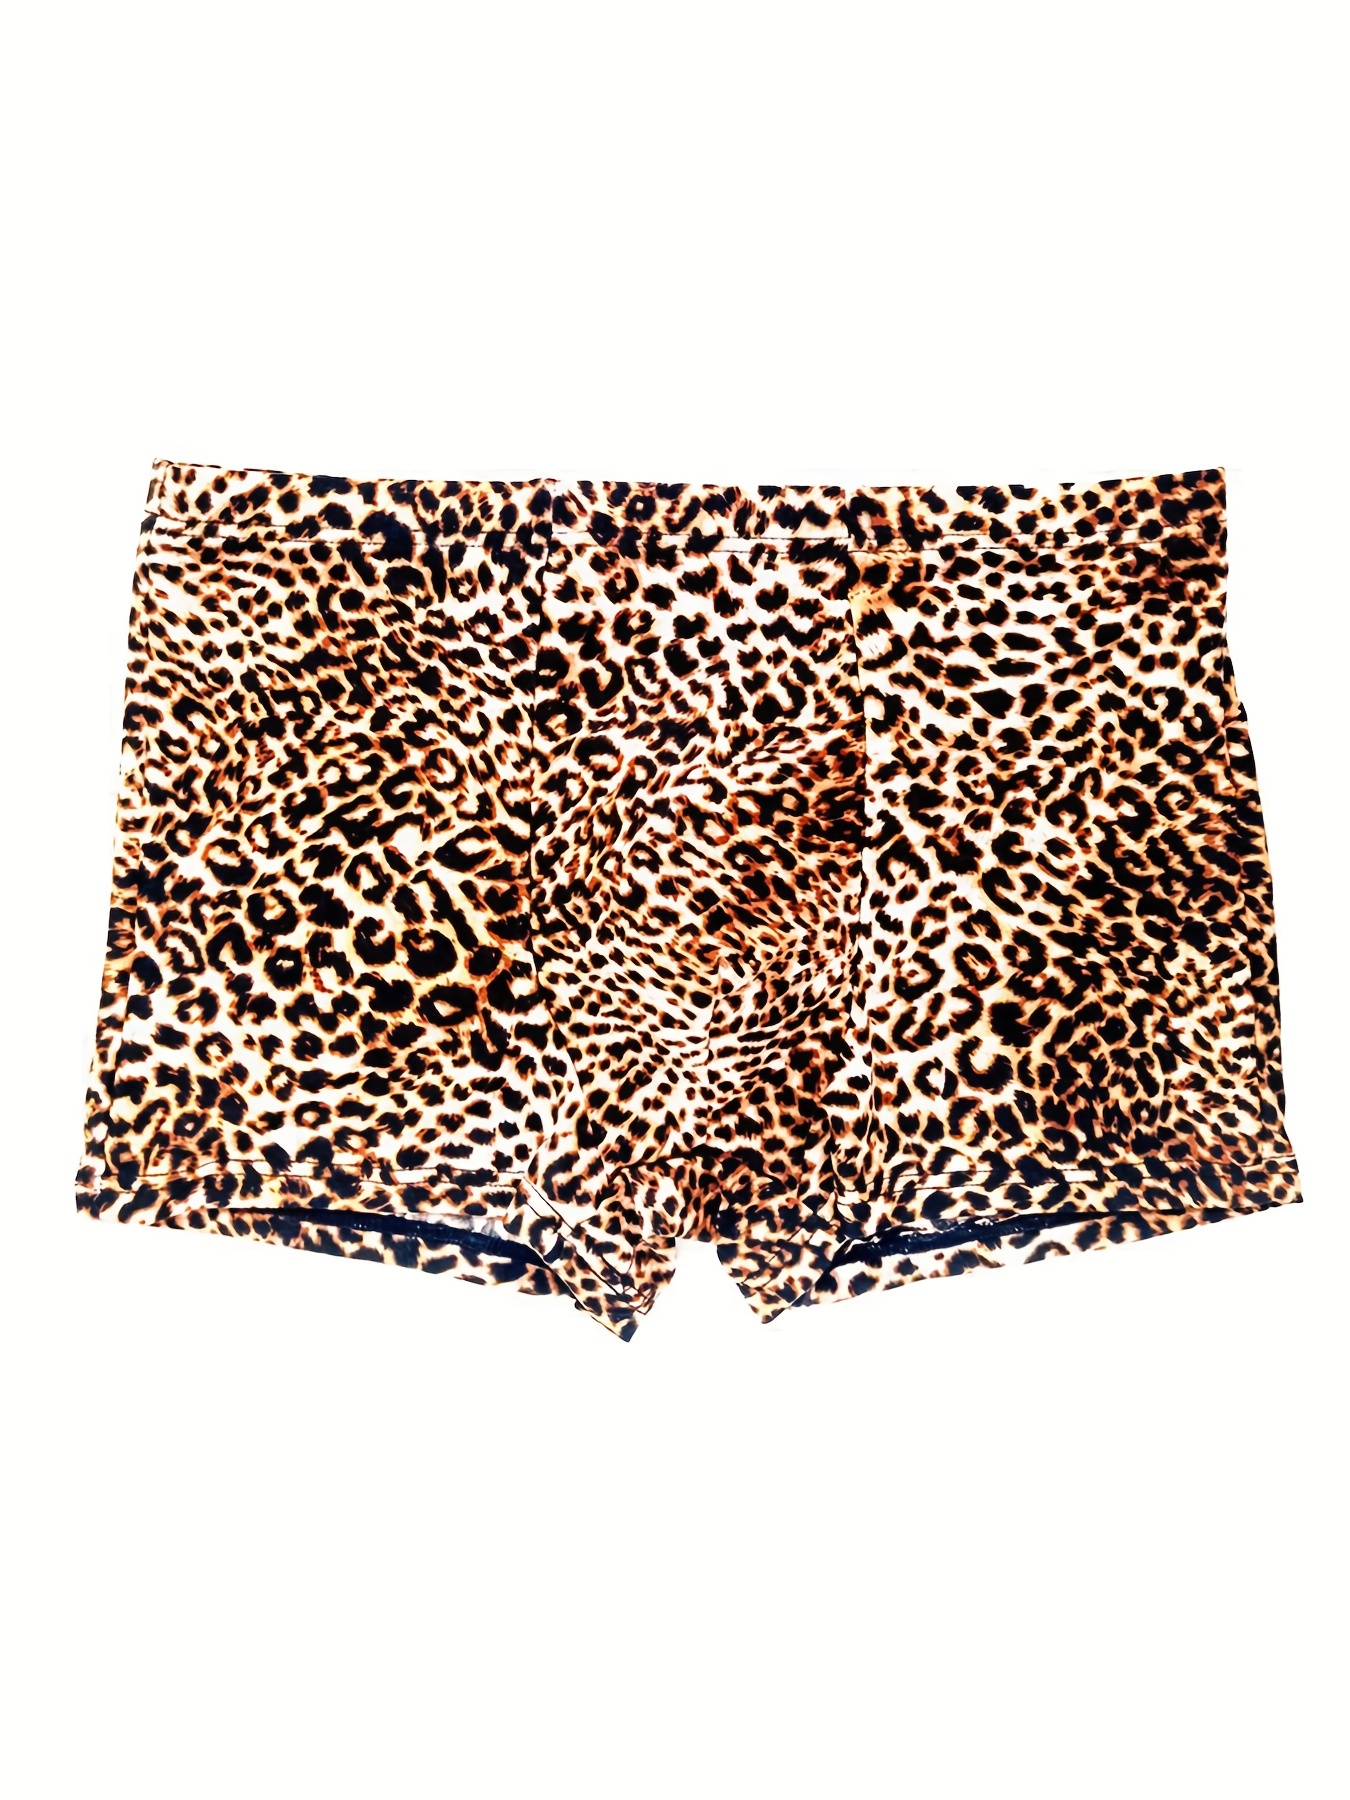 1pc Men's Leopard Print Fashion Breathable Comfy Stretchy Boxer Briefs  Shorts, Men's Underwear, Valentine's Day